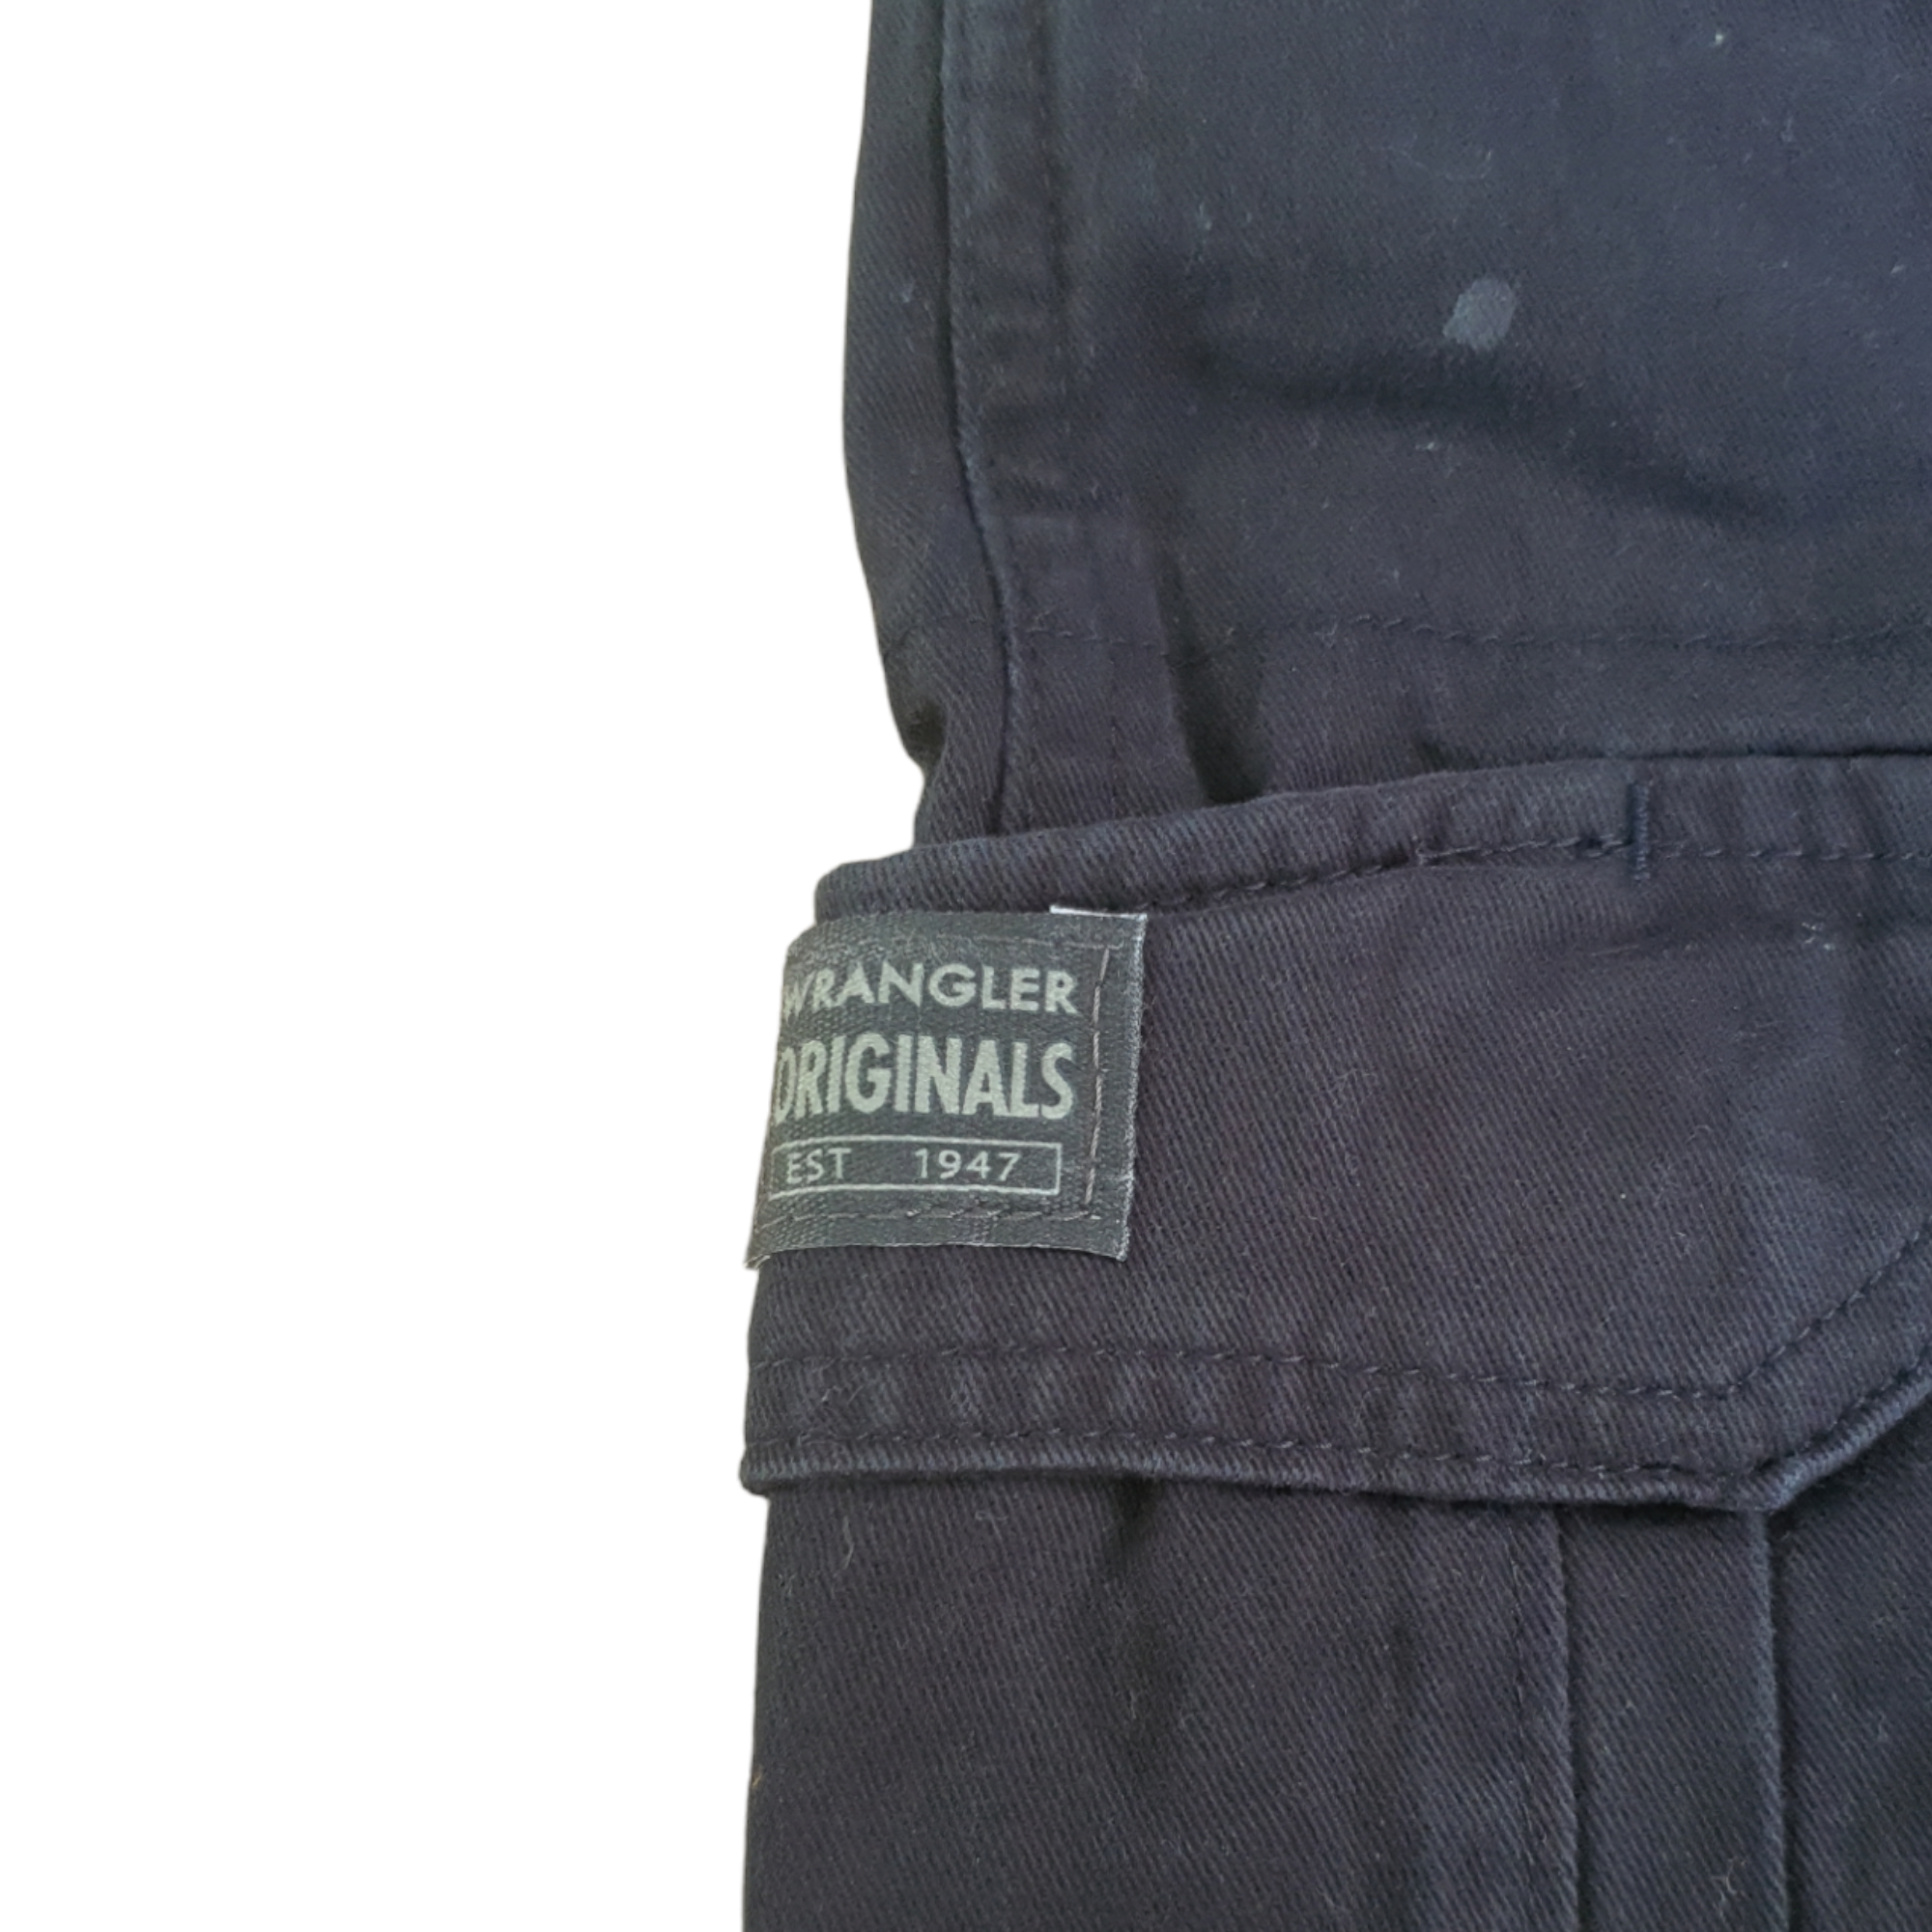 [36x32] Wrangler Originals Cargo Pants